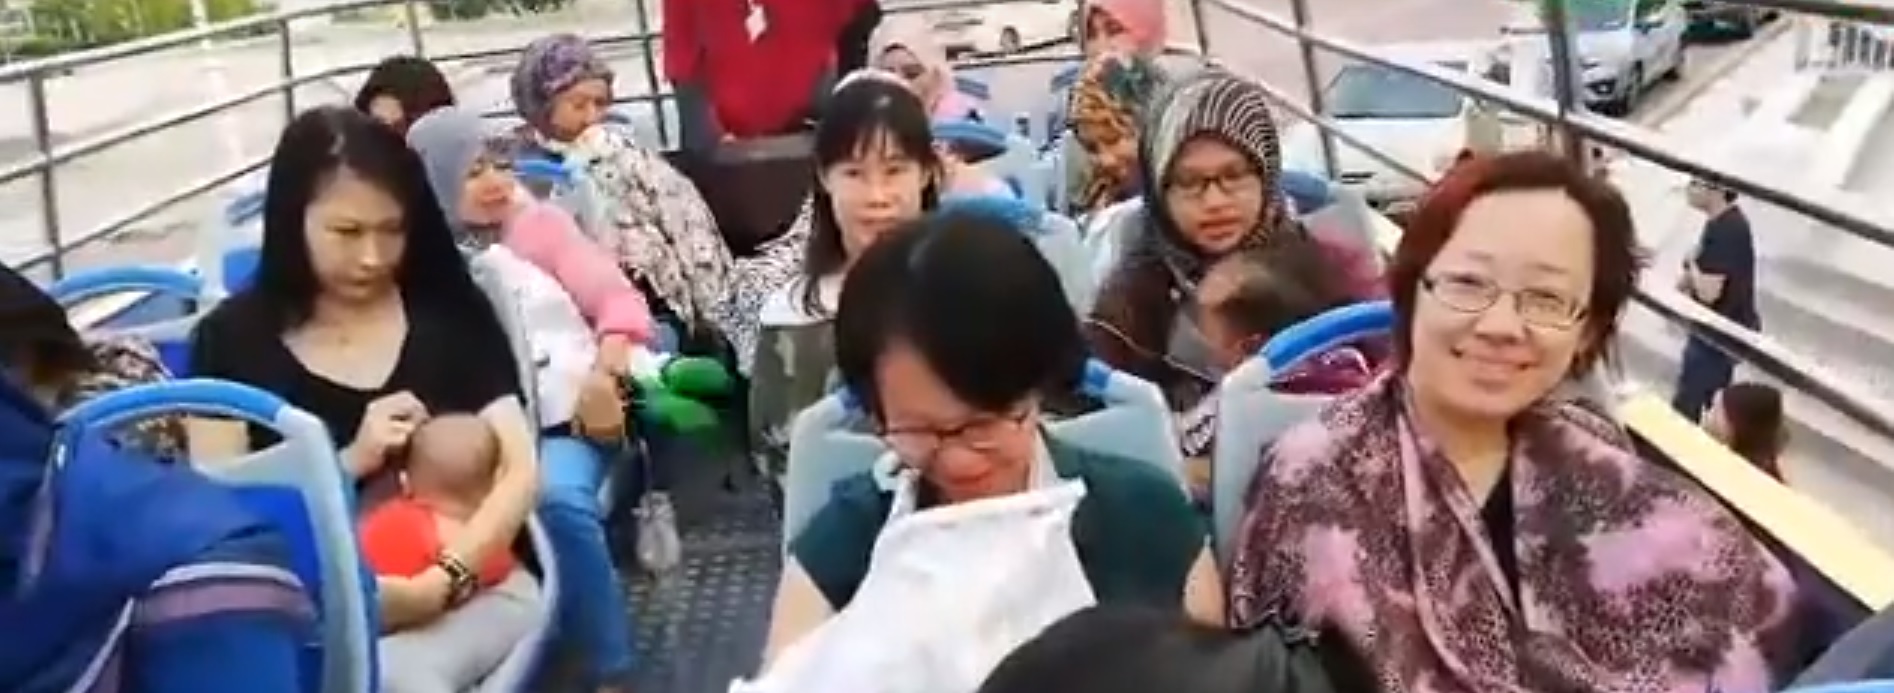 Mums breastfeeding on the bus